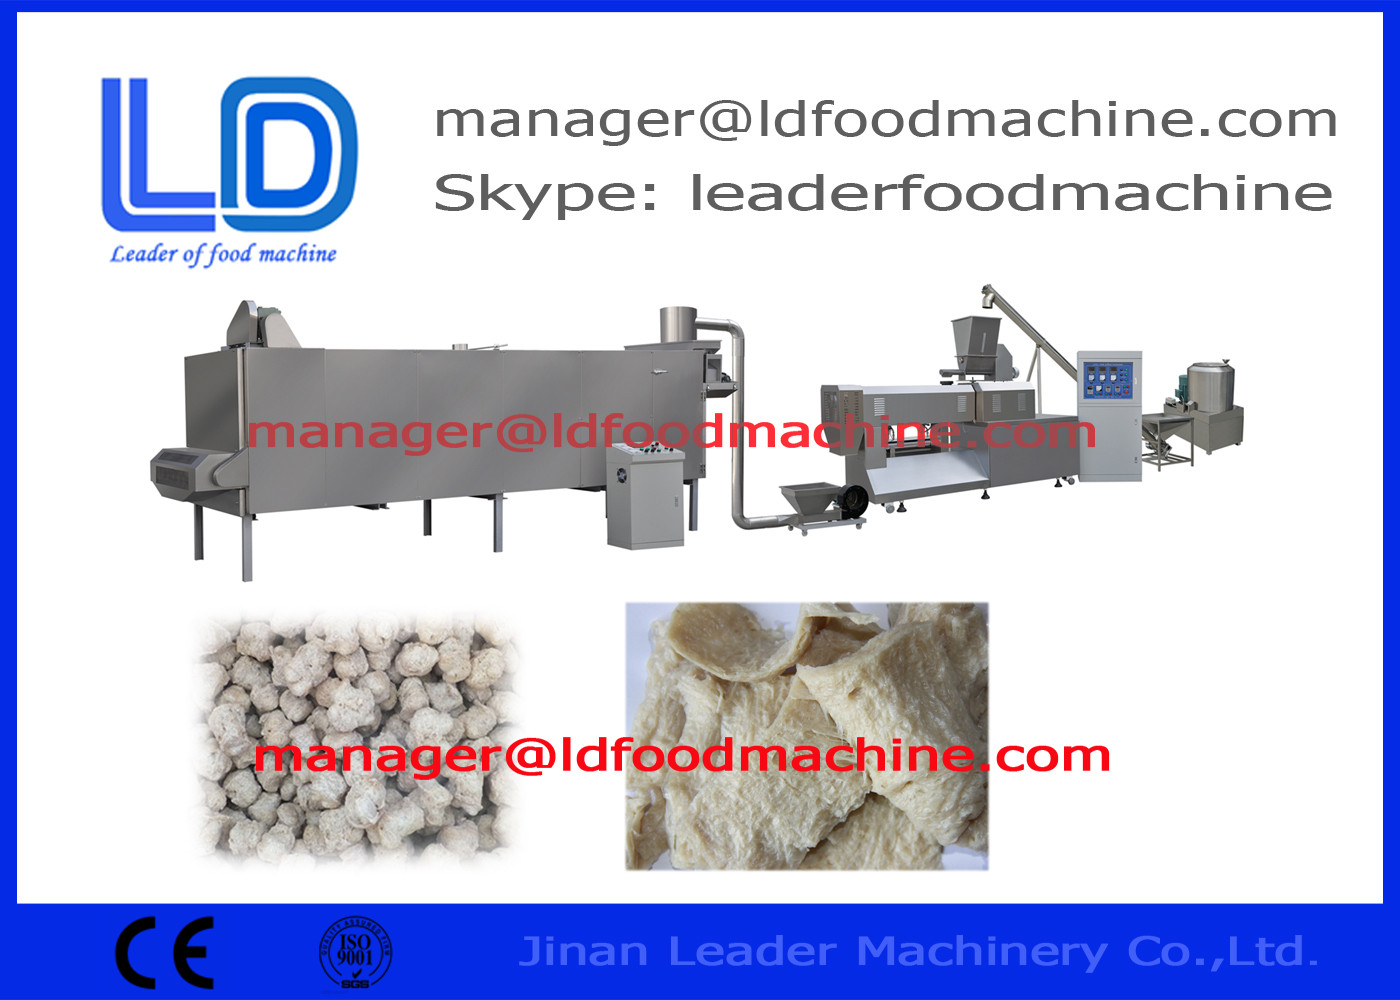 380 V/50 hertz de soja d'installation de fabrication, machine automatique de nourriture de protéine de soja